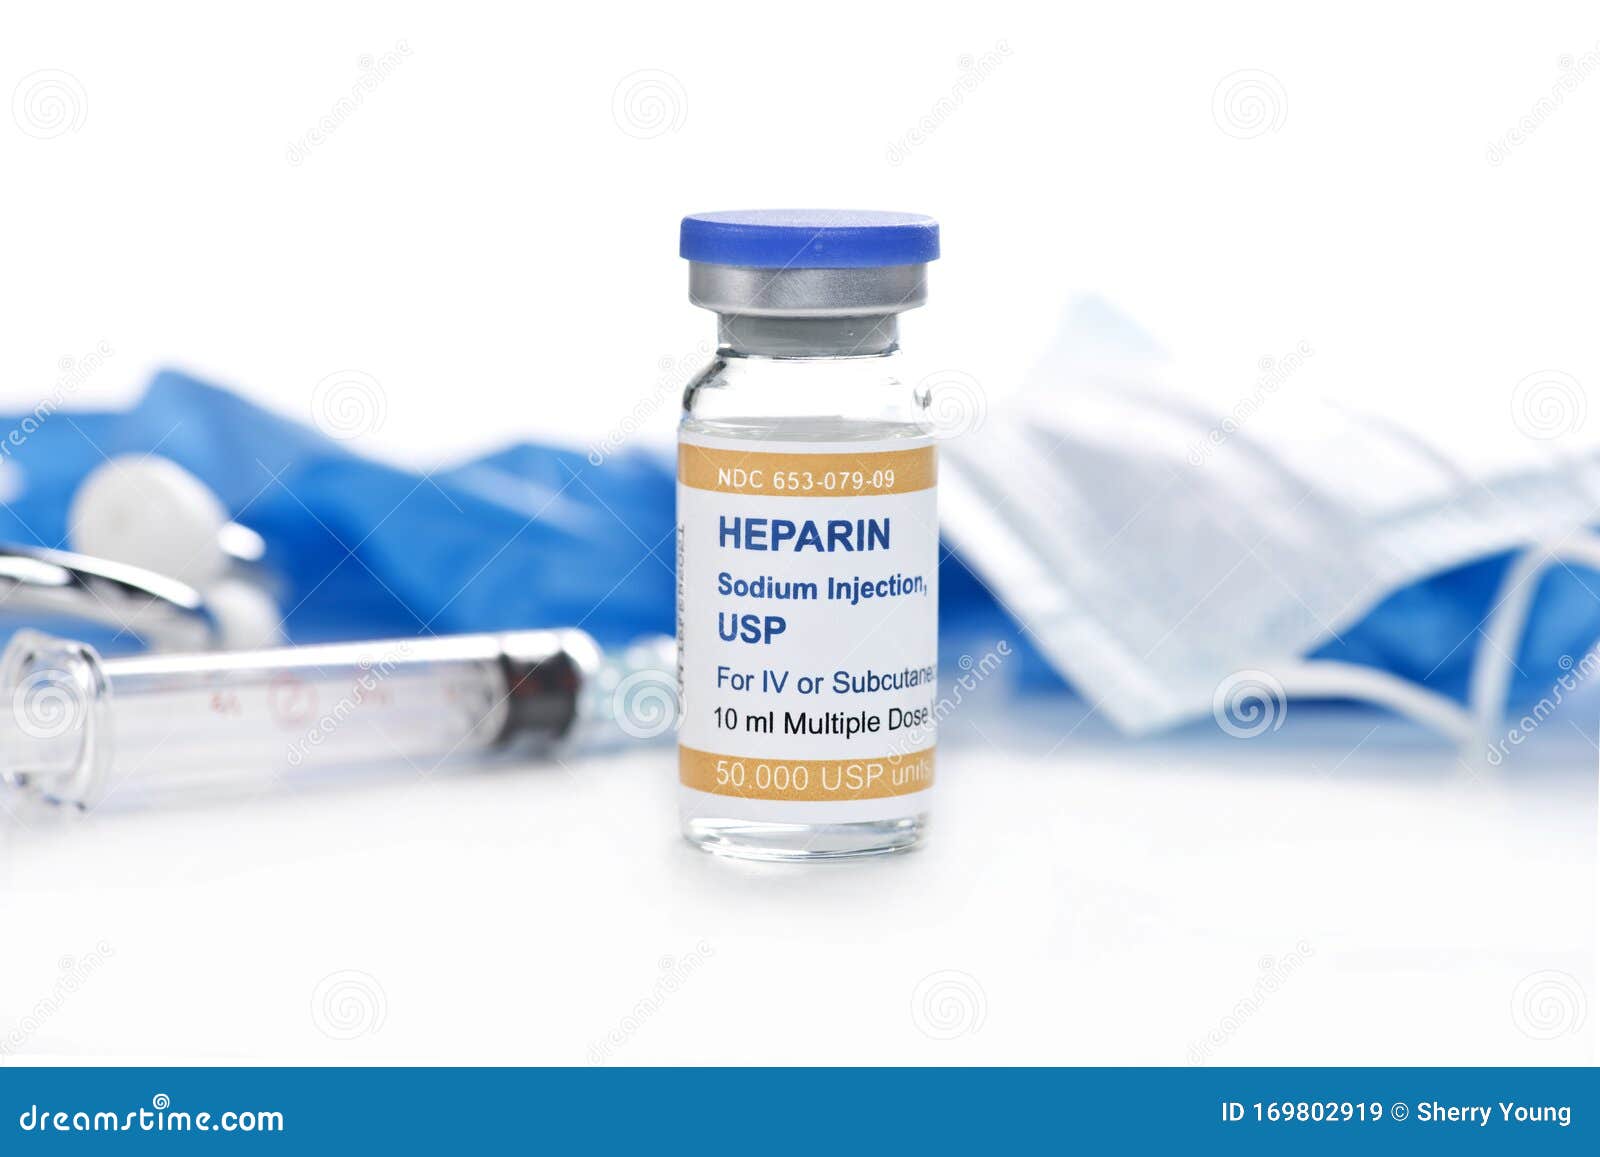 heparin sodium injection vial